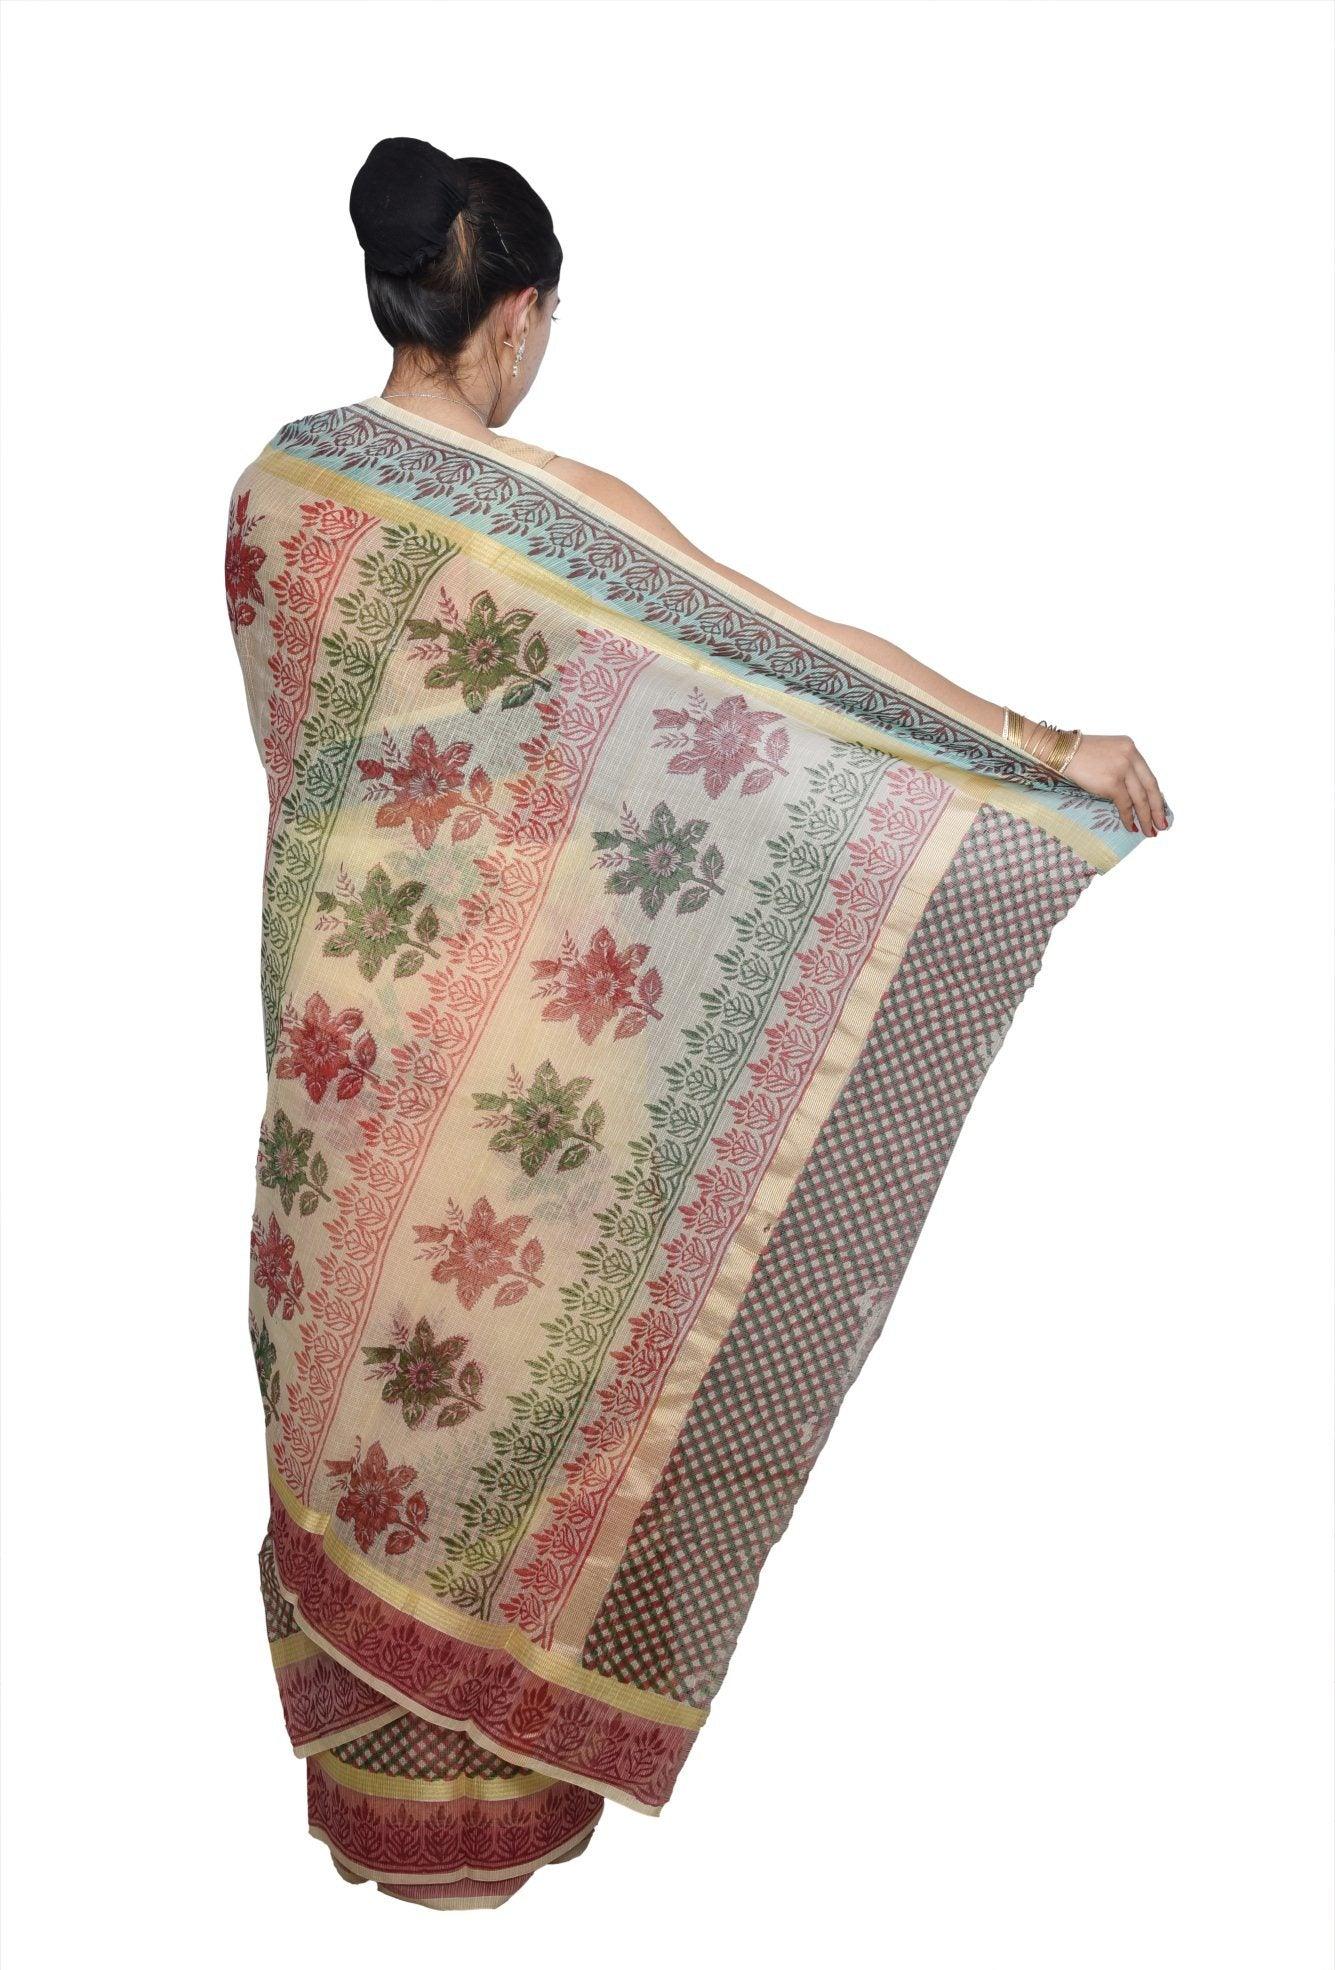 Designer Beige Block Printed Kota Cotton Saree KSC106-Ethnic's By Anvi Creations-Handloom Saree